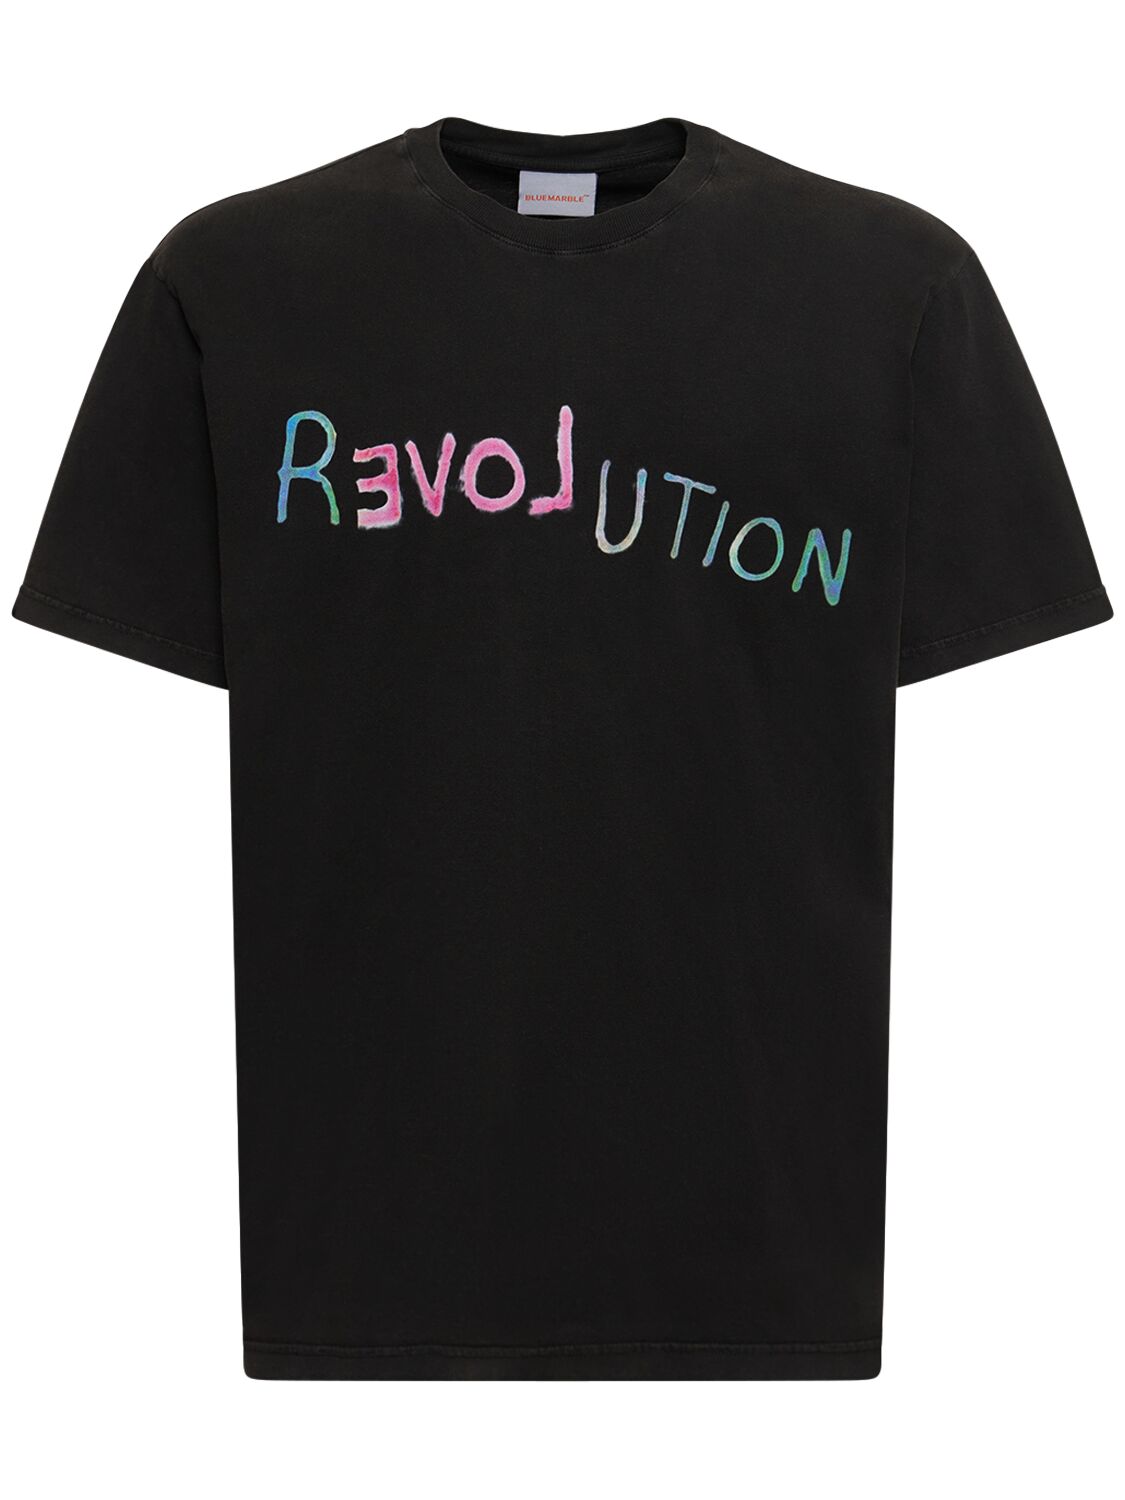 Image of "revolution" Printed T-shirt